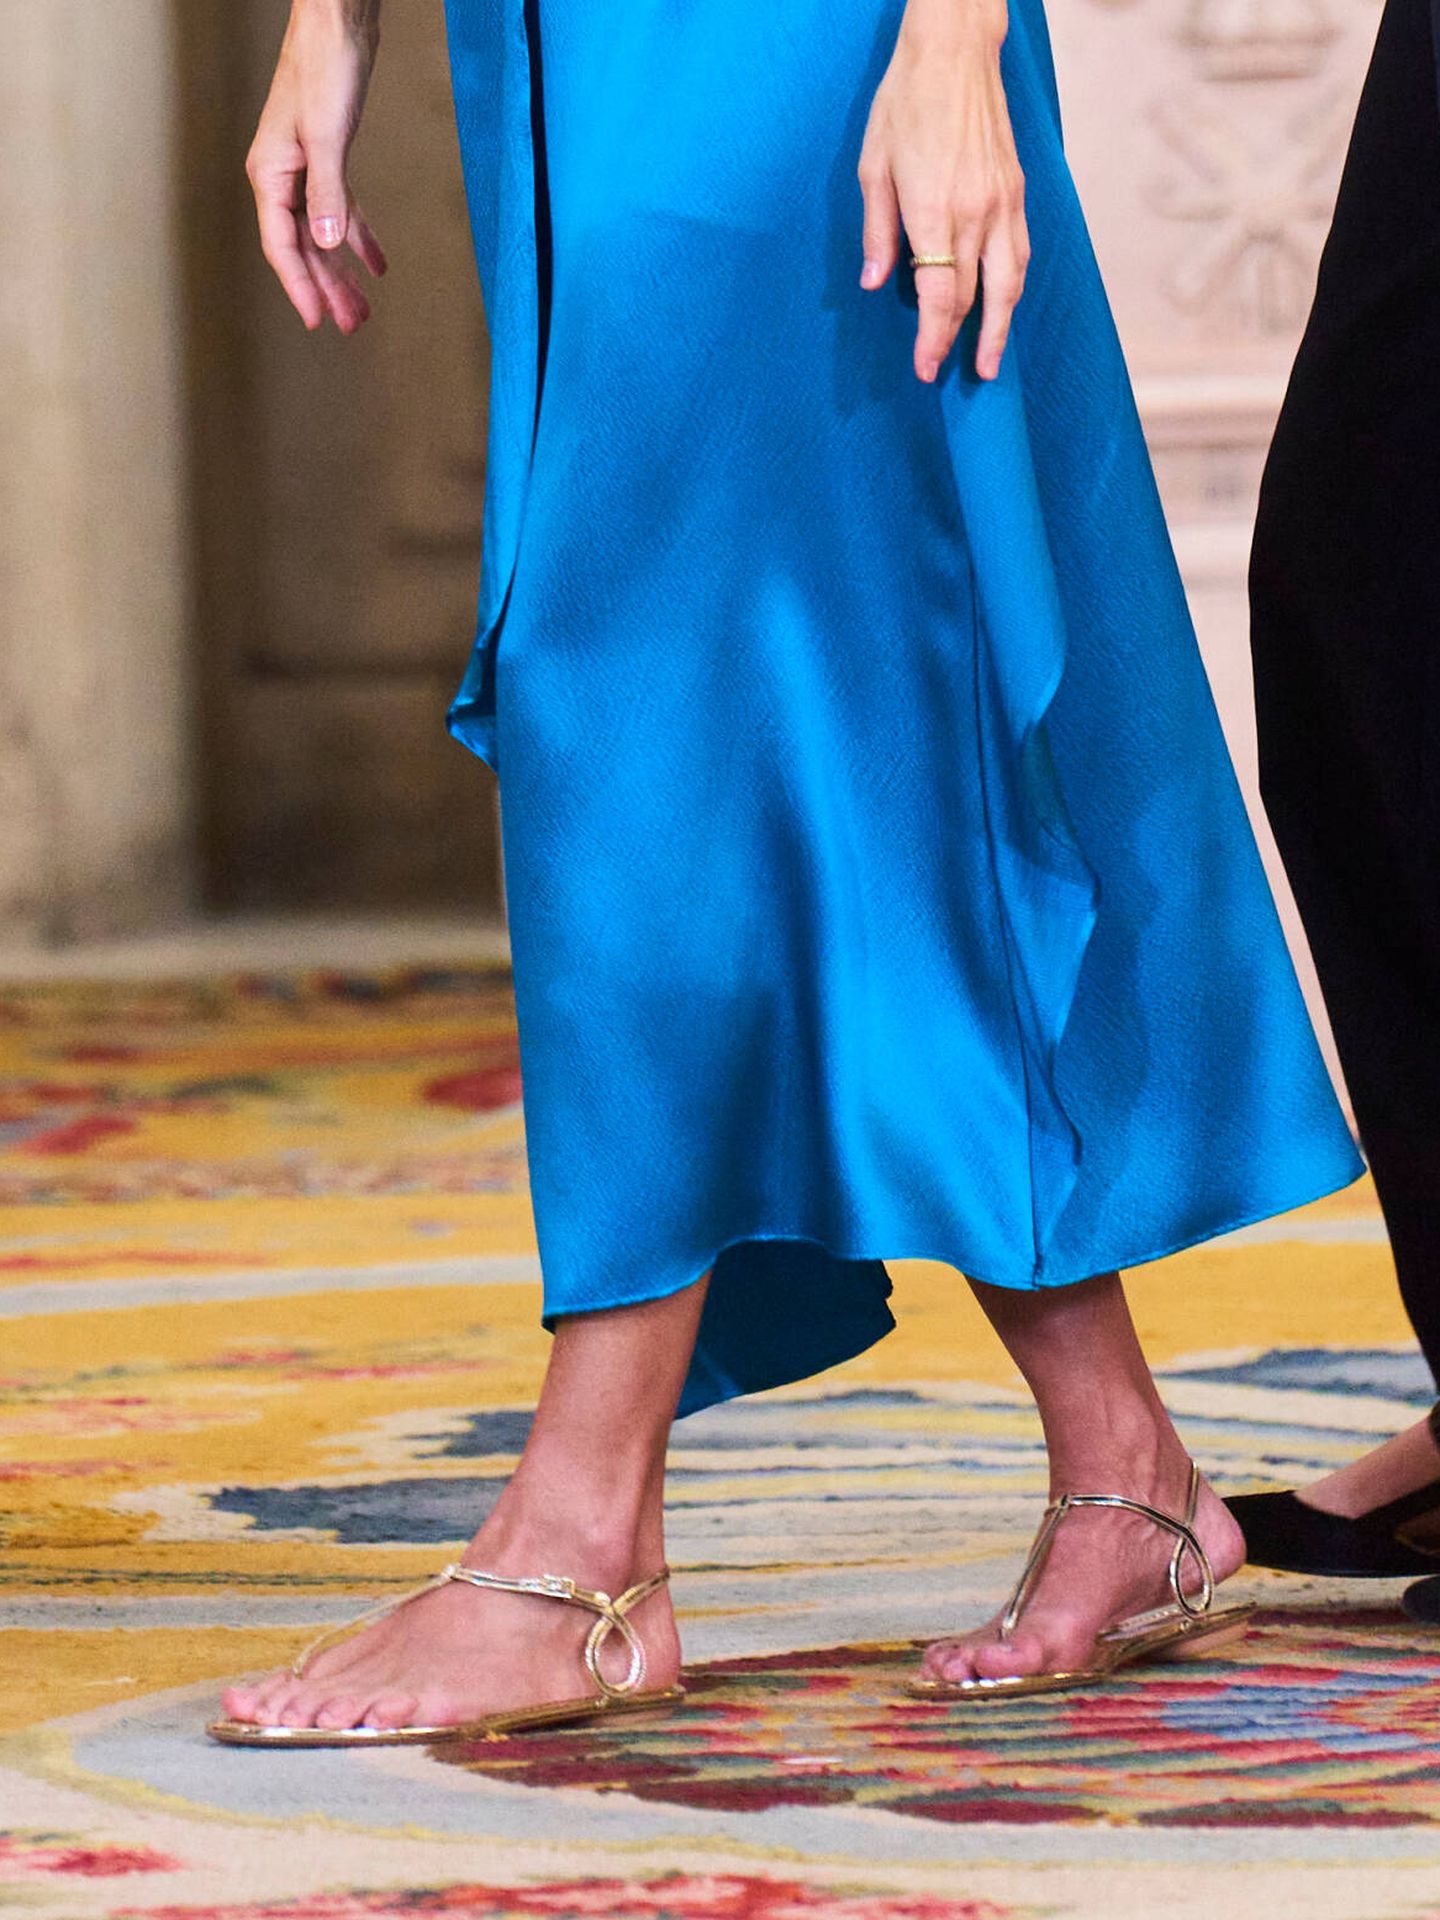  La reina Letizia con sandalias de Aquazzura. (Limited Pictures)